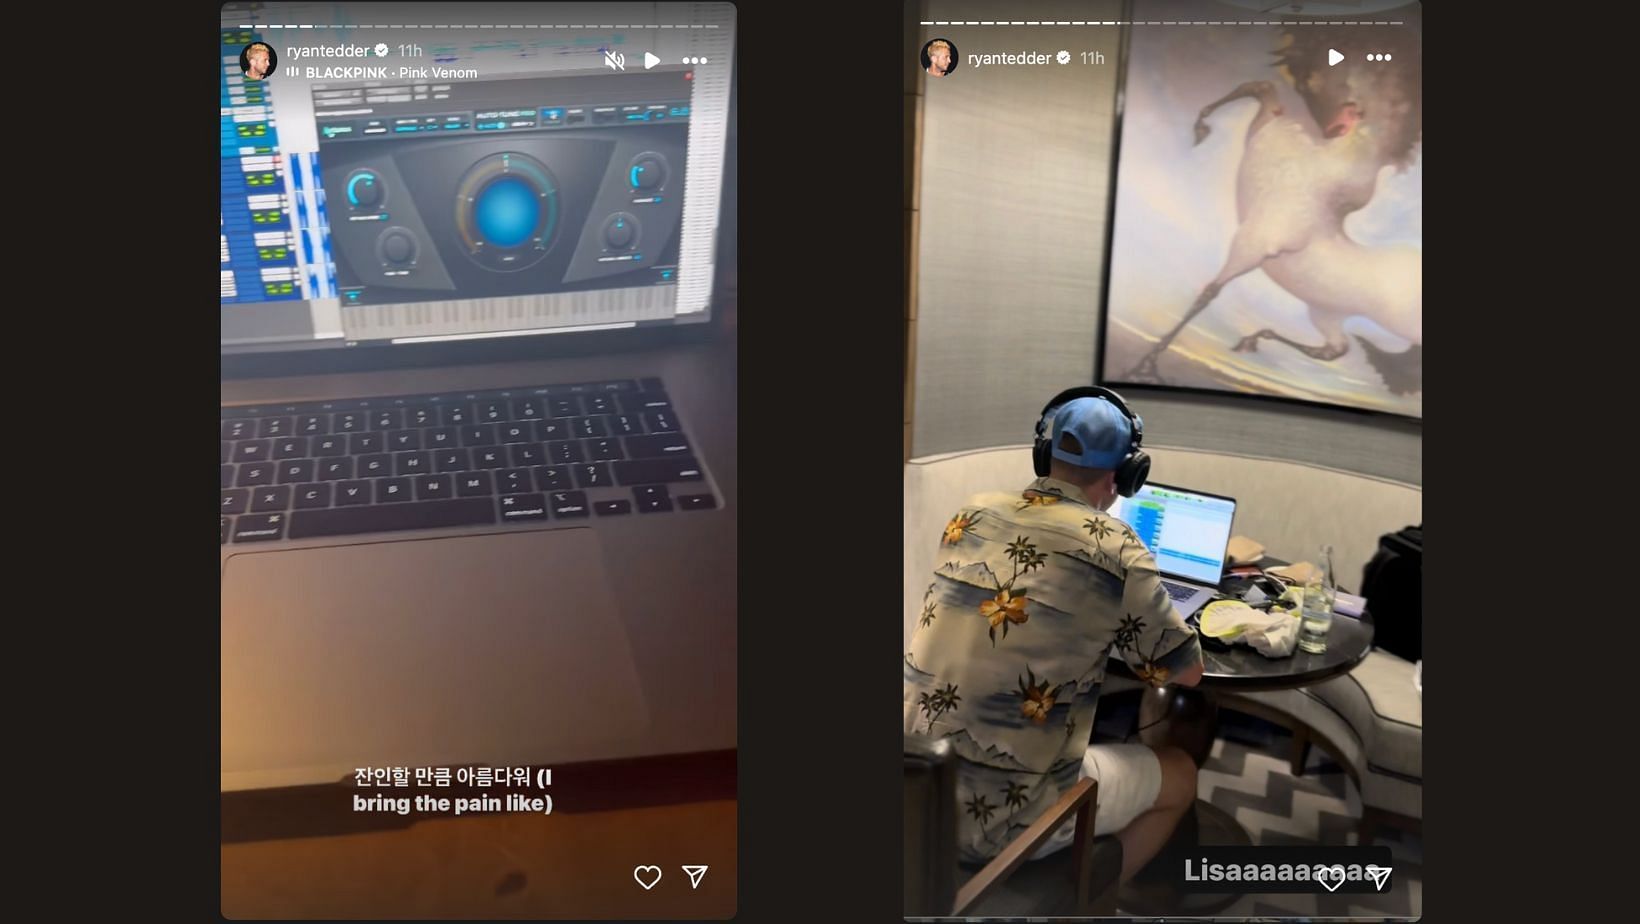 Ryan Tedder shared pictures of him working on Instagram stories. (Images via Instagram/@ryantedder)